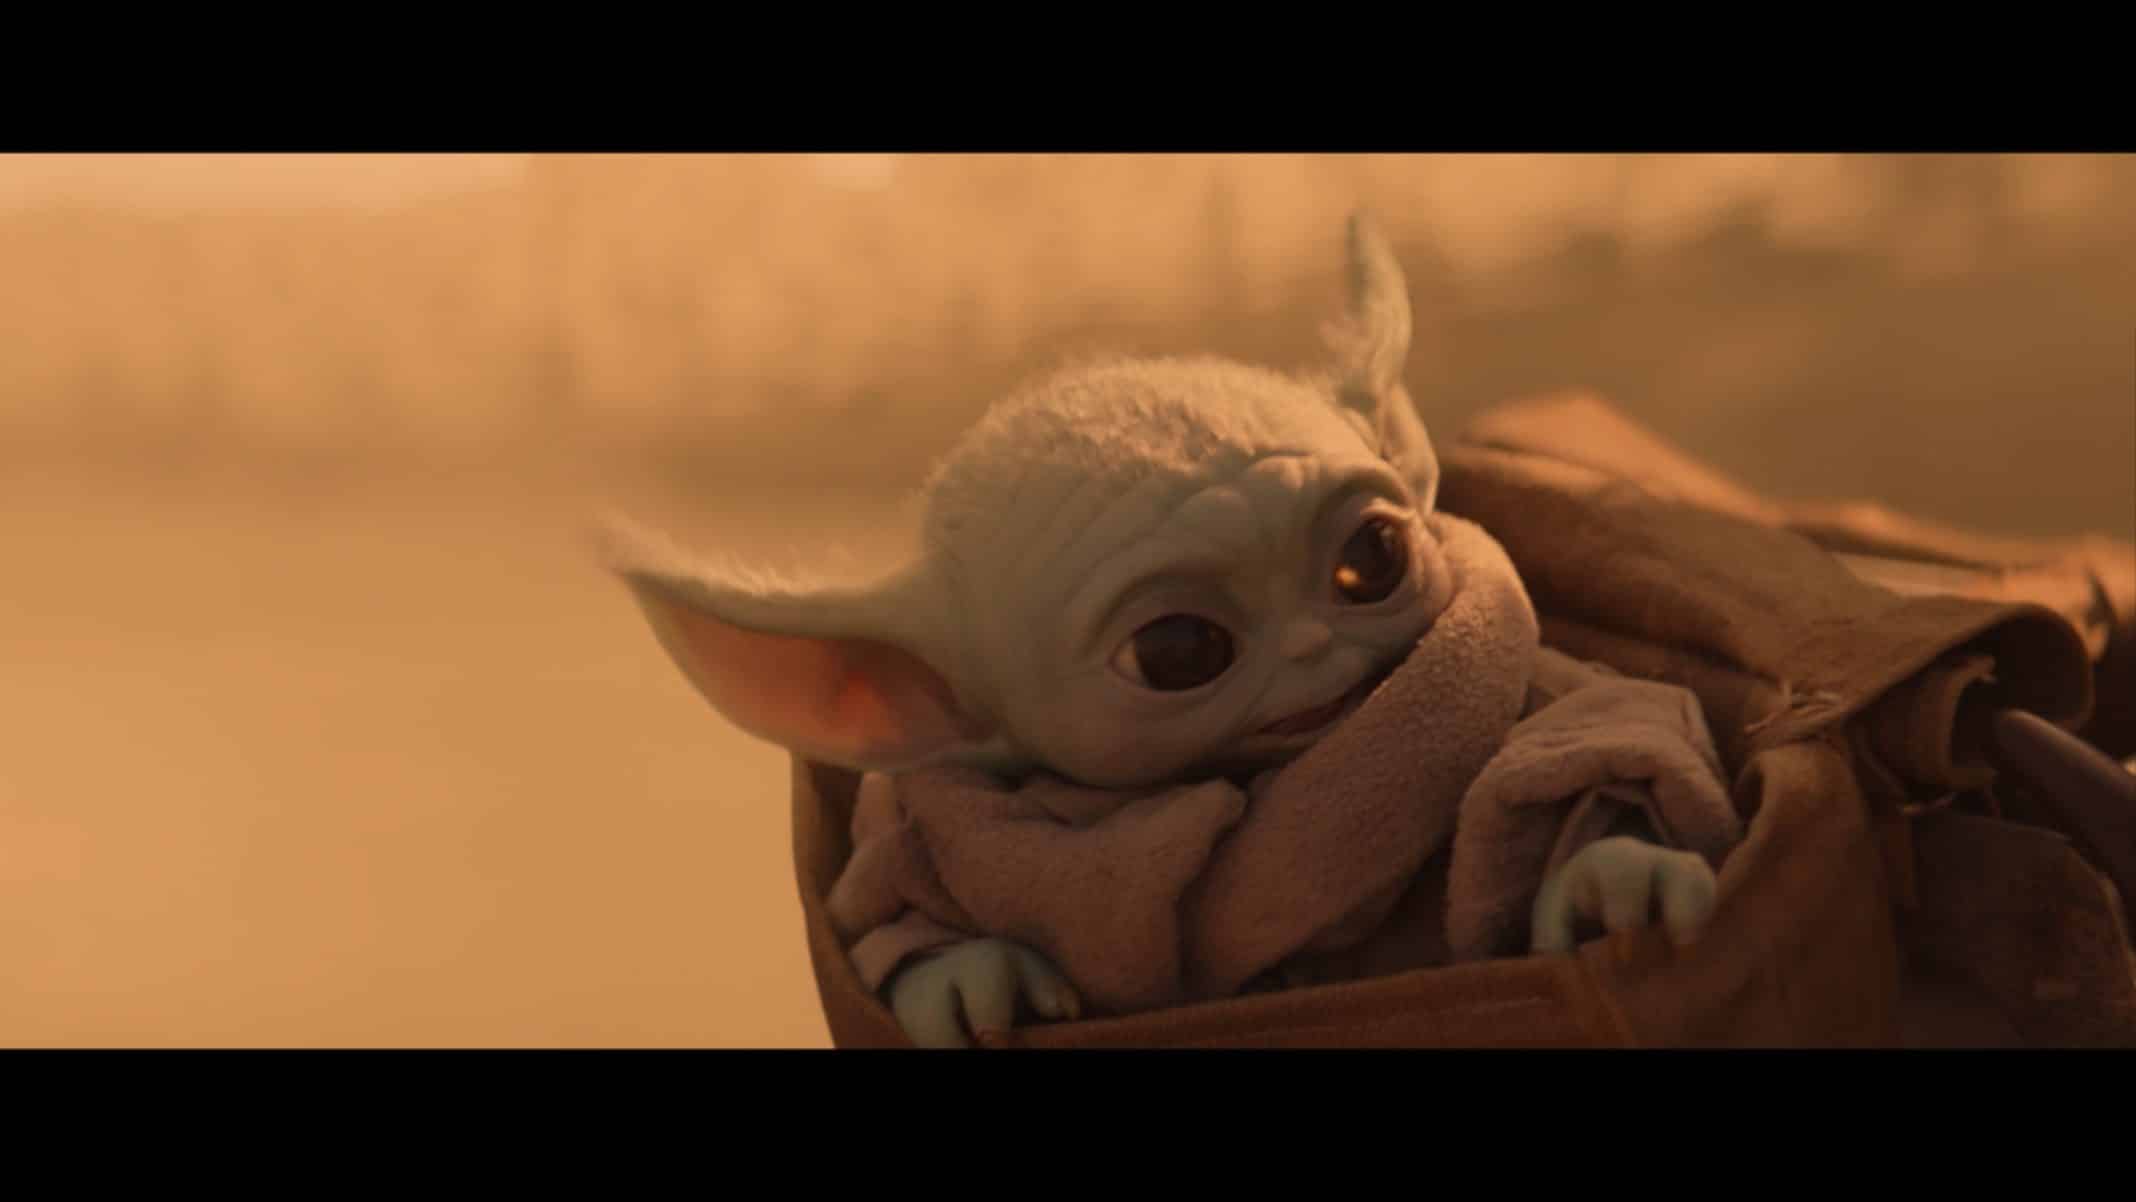 Baby Yoda riding with The Mandalorian